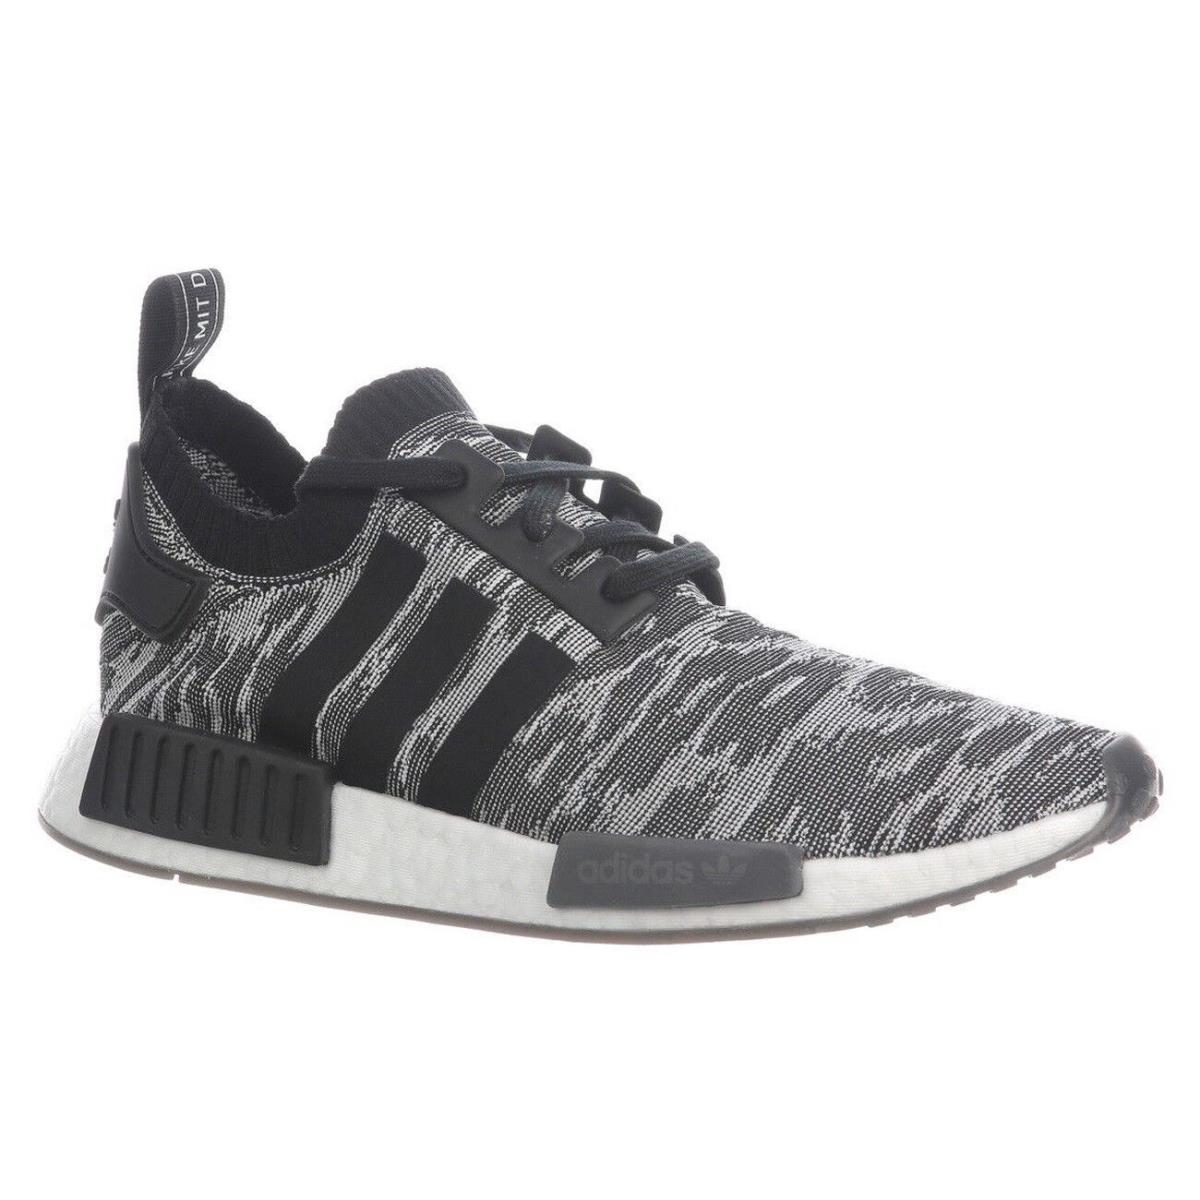 Adidas shoes NMD - Gray / Core Black 0